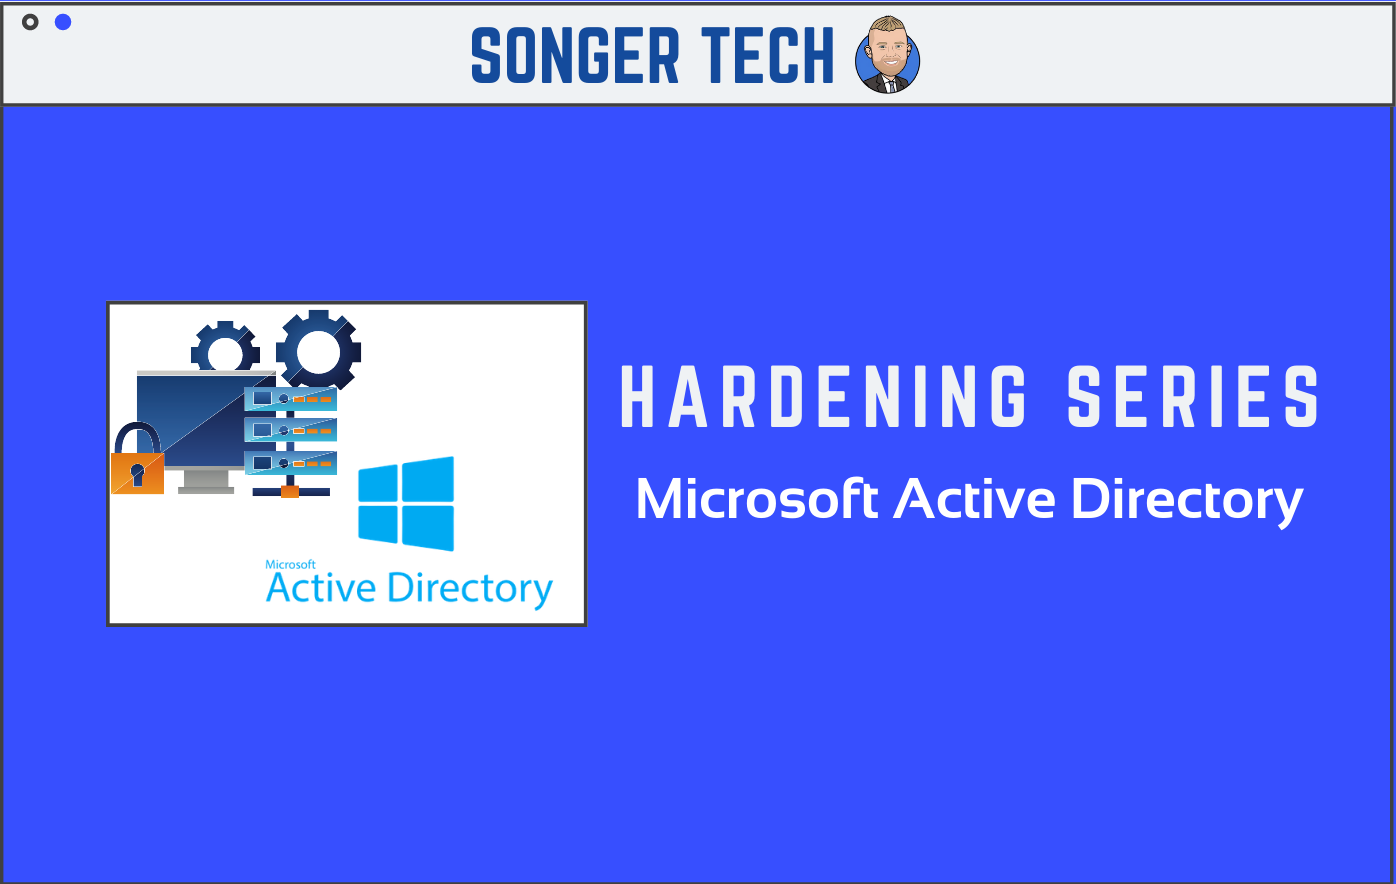 Hardening Series: Microsoft Active Directory